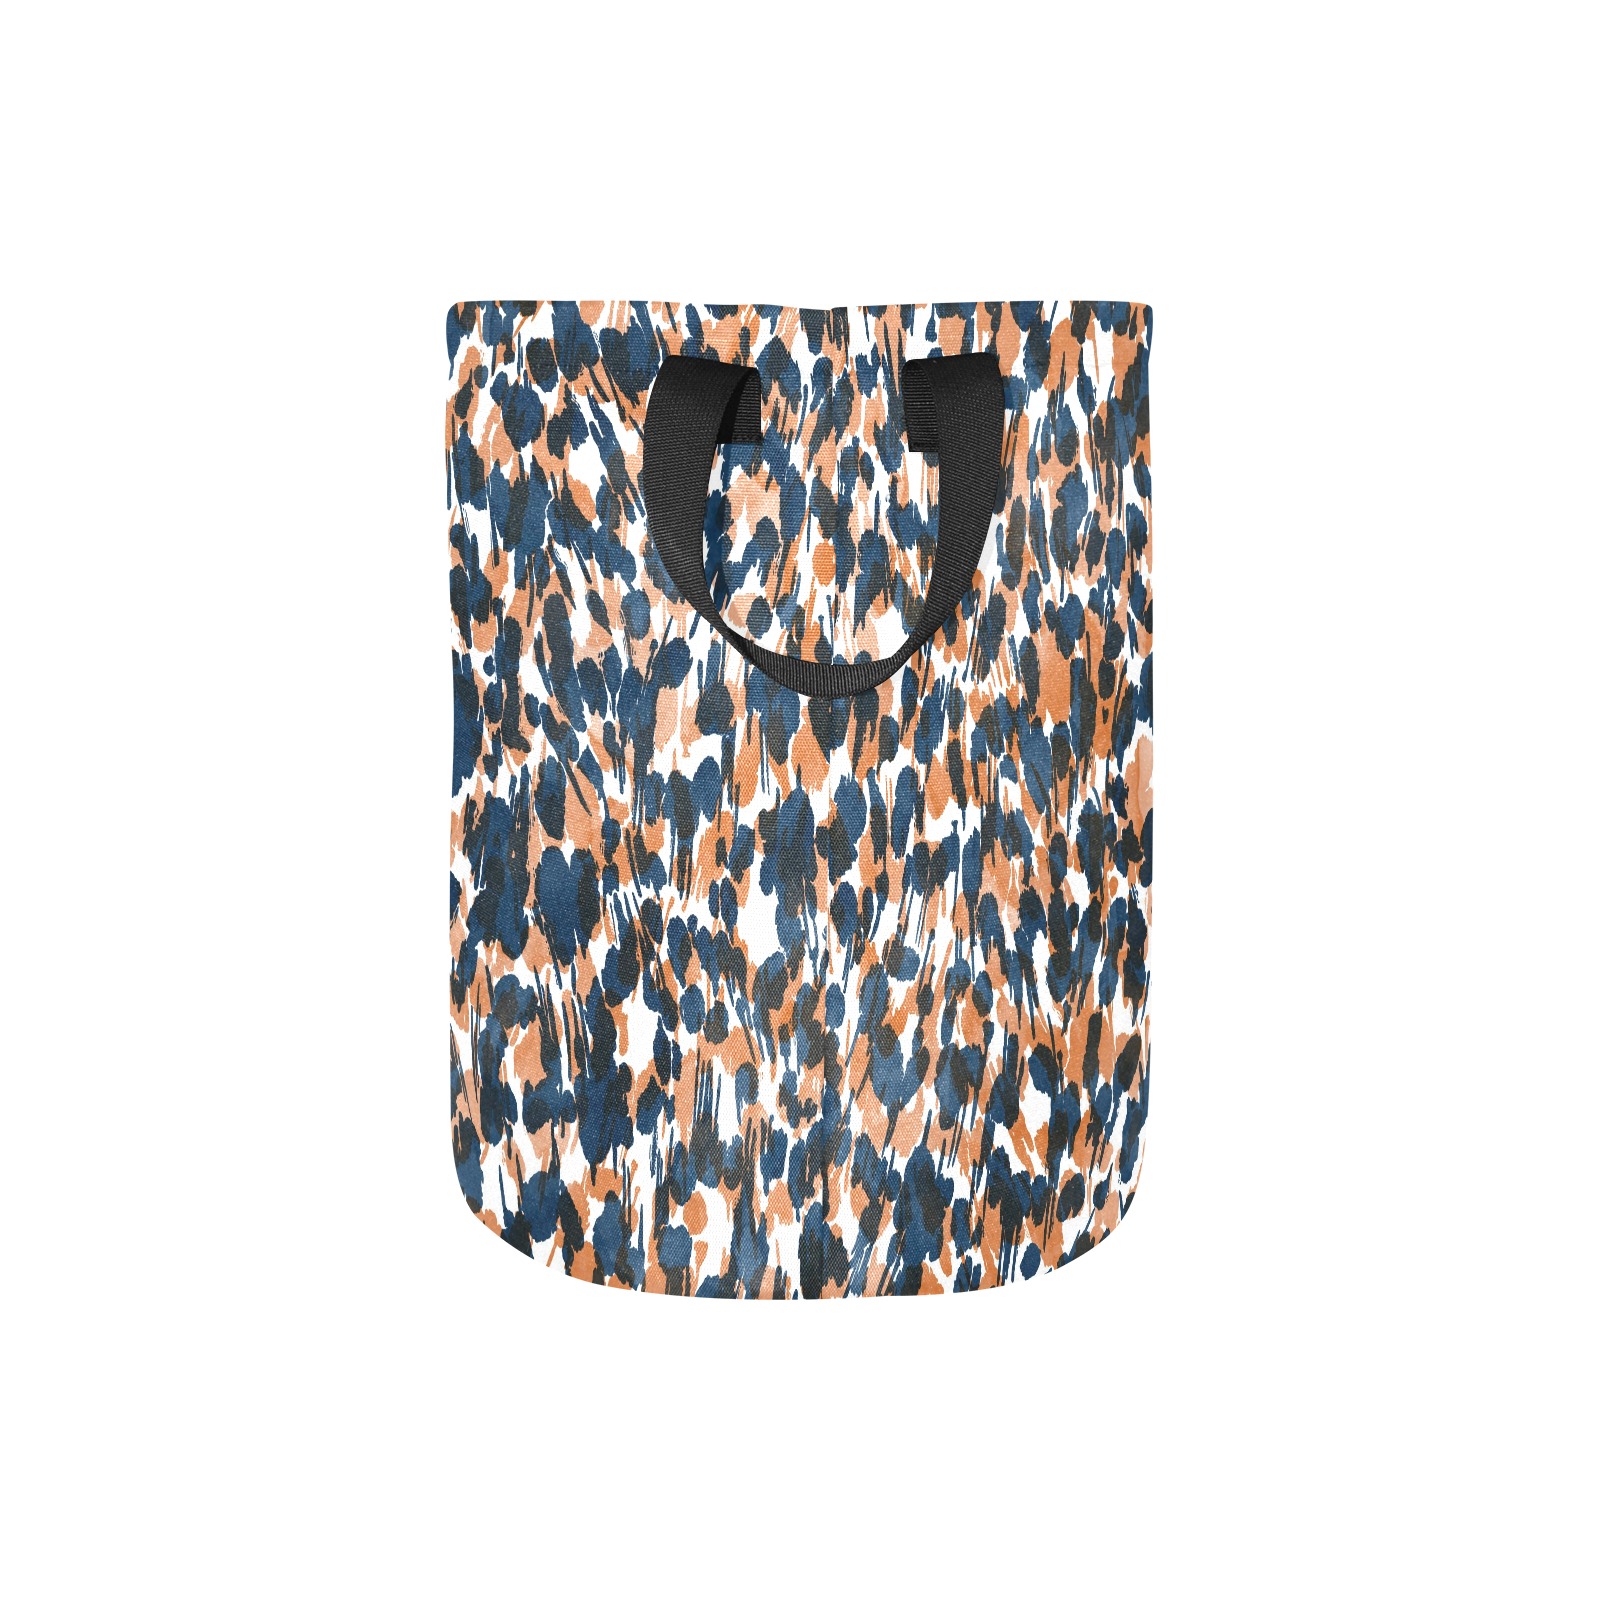 Dots brushstrokes animal print Laundry Bag (Small)